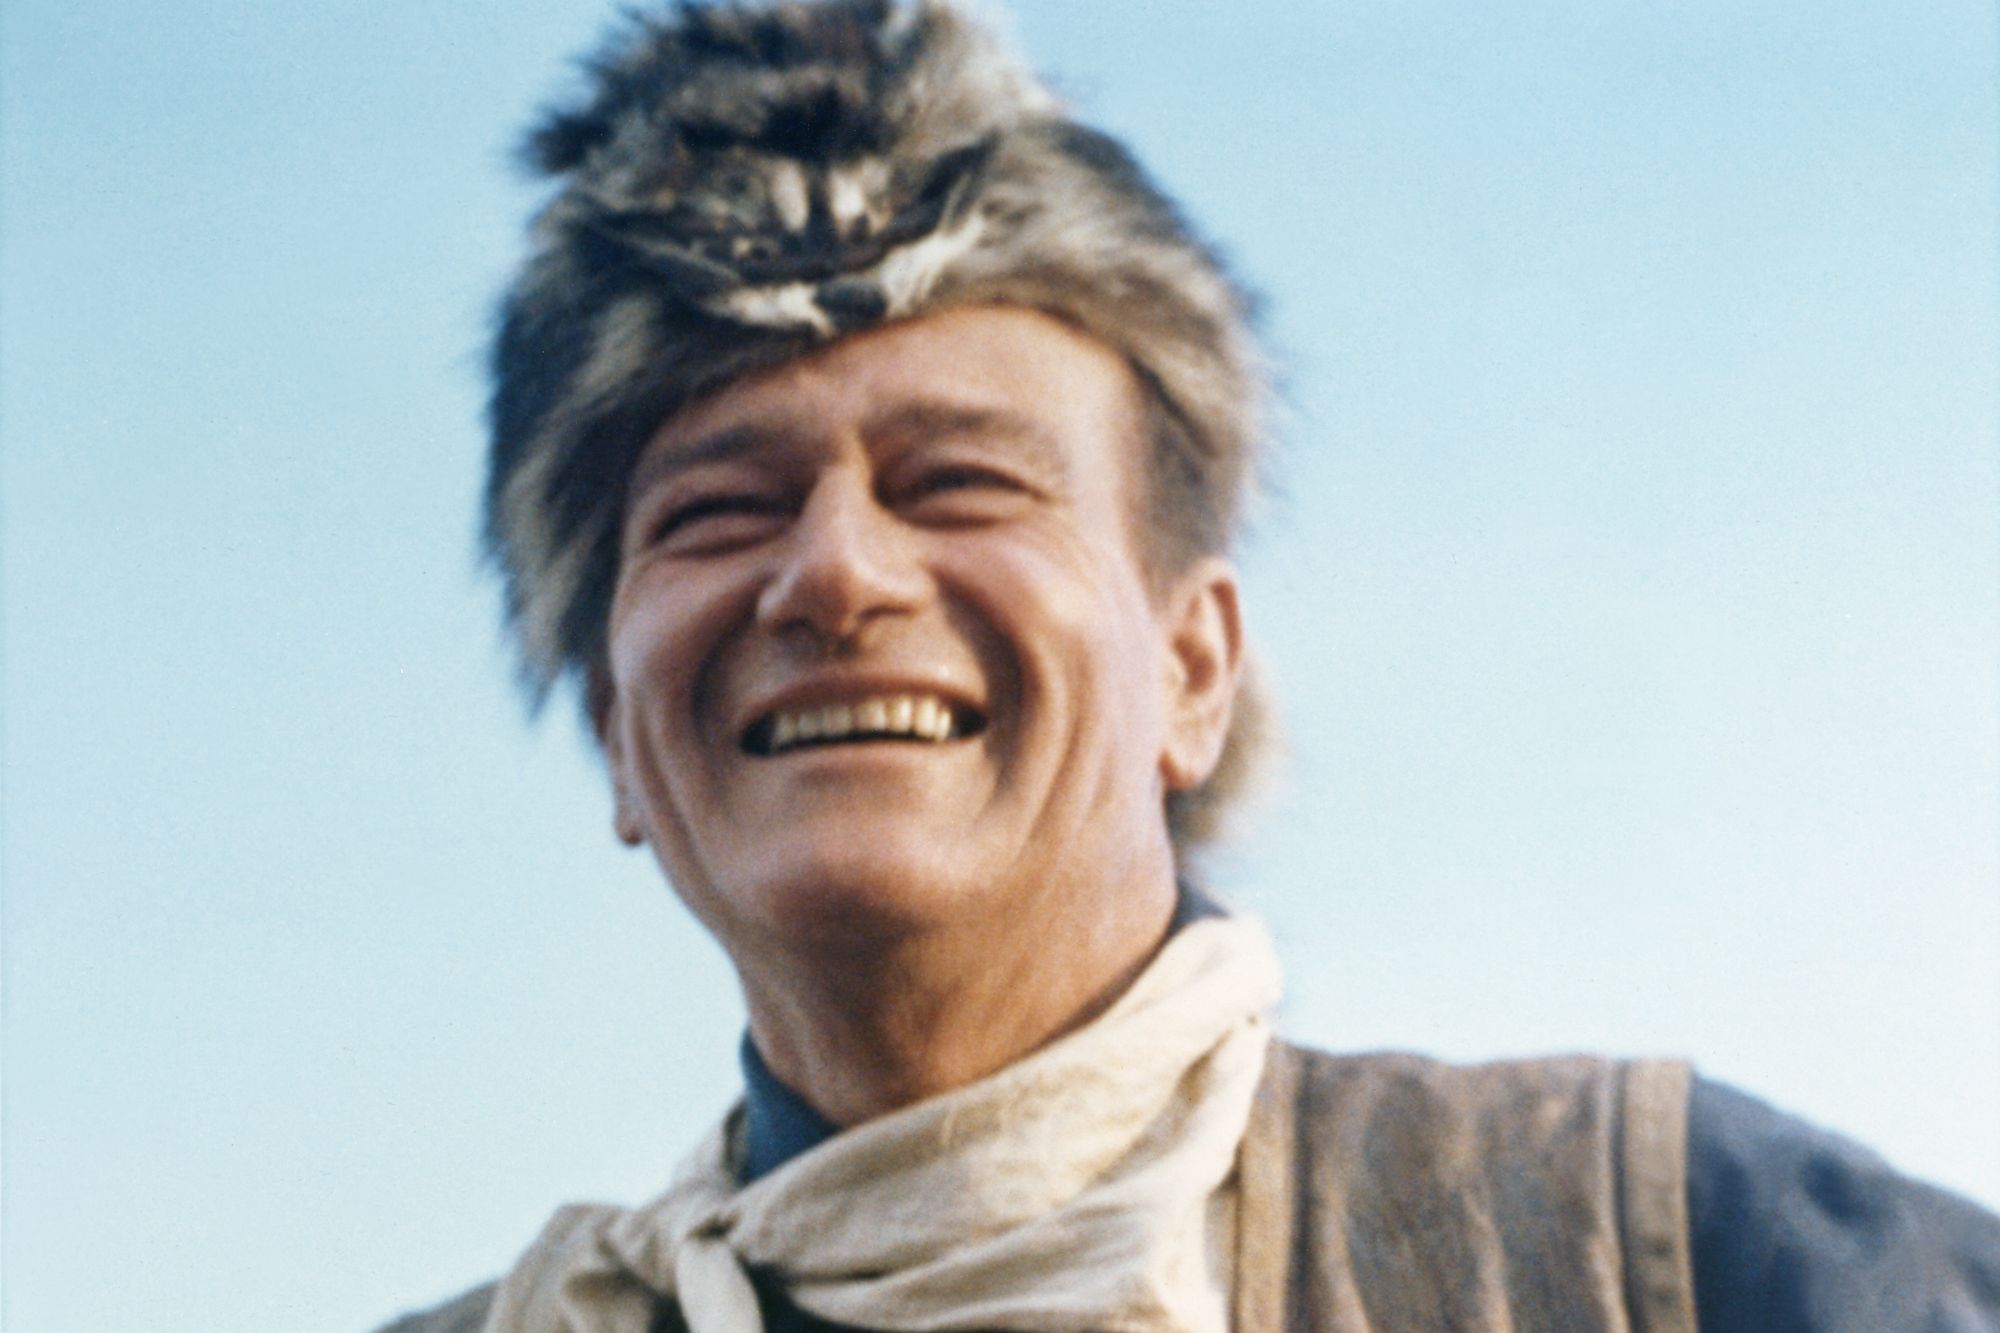 John Wayne as Davy Crockett smiling in costume